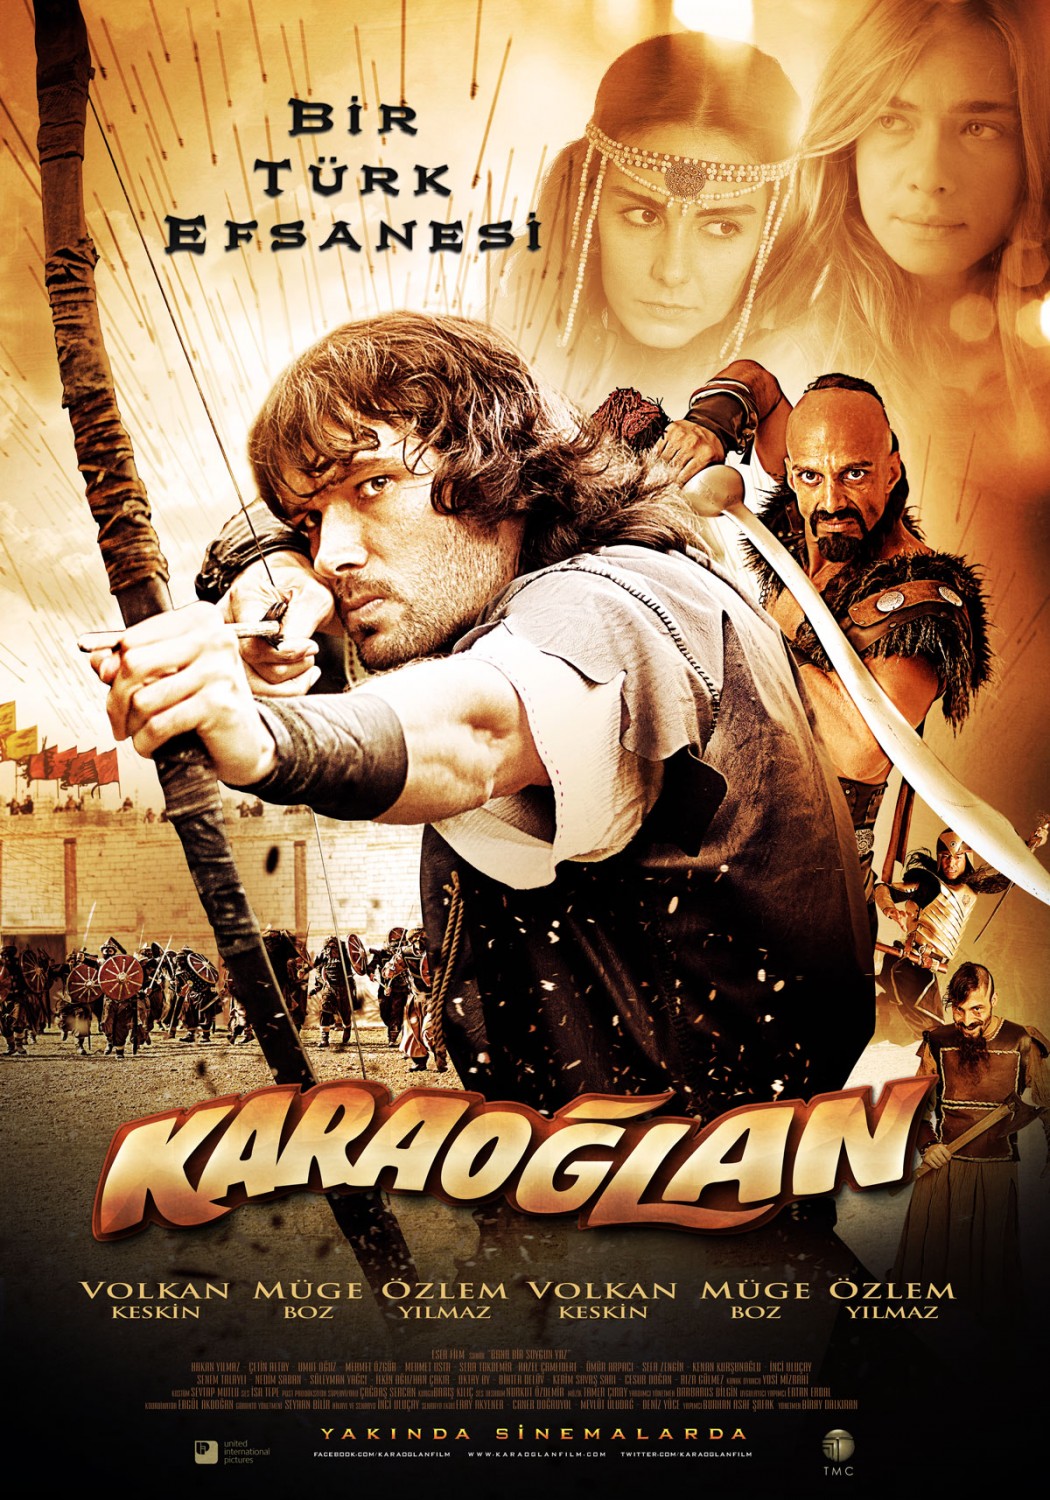 Extra Large Movie Poster Image for Karaoglan (#4 of 5)